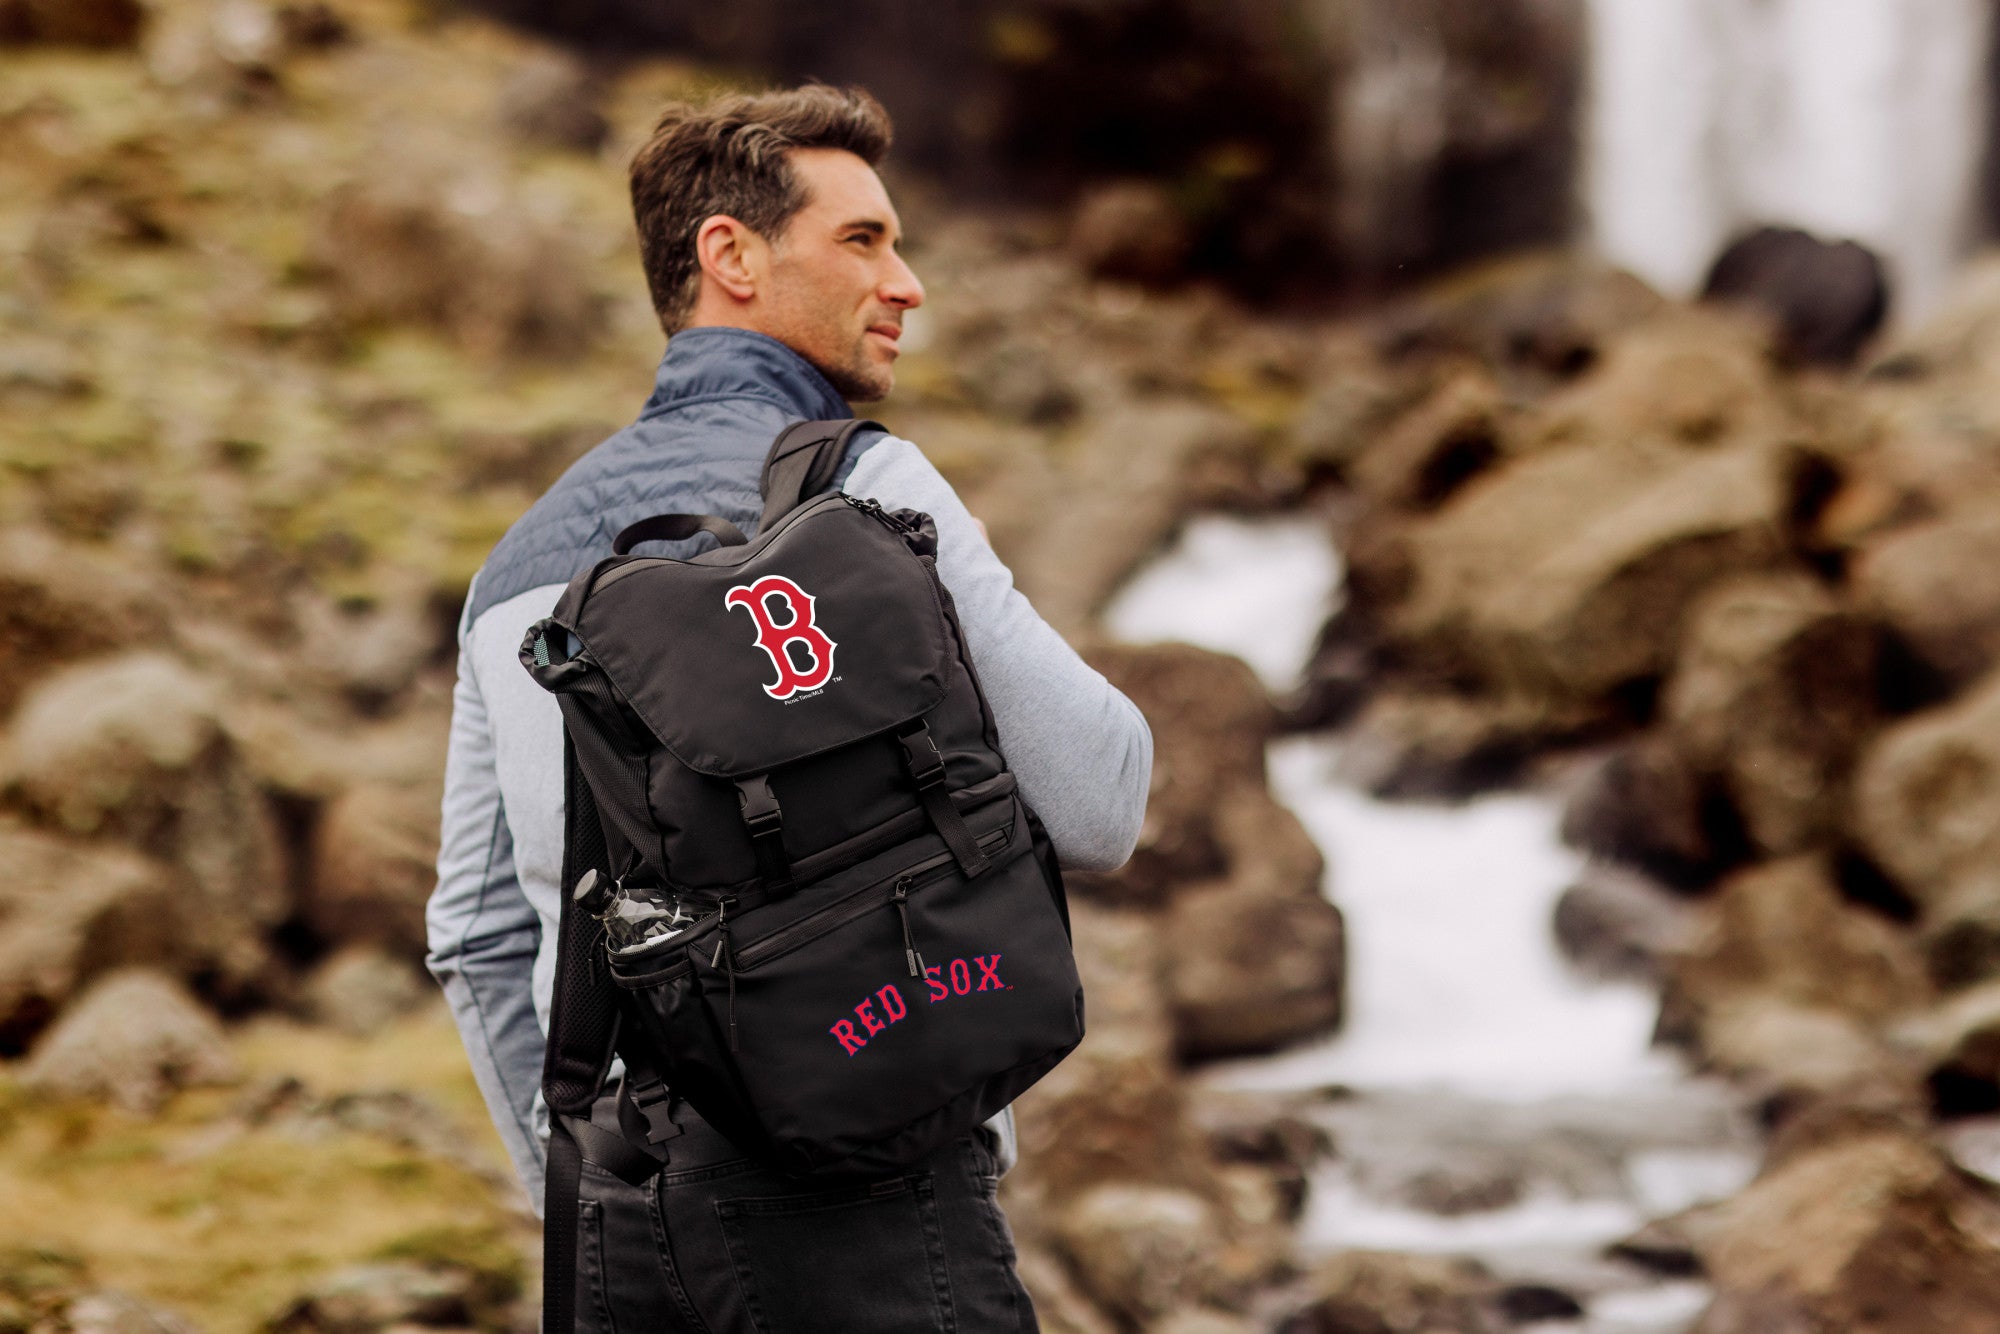 Boston Red Sox - Tarana Backpack Cooler